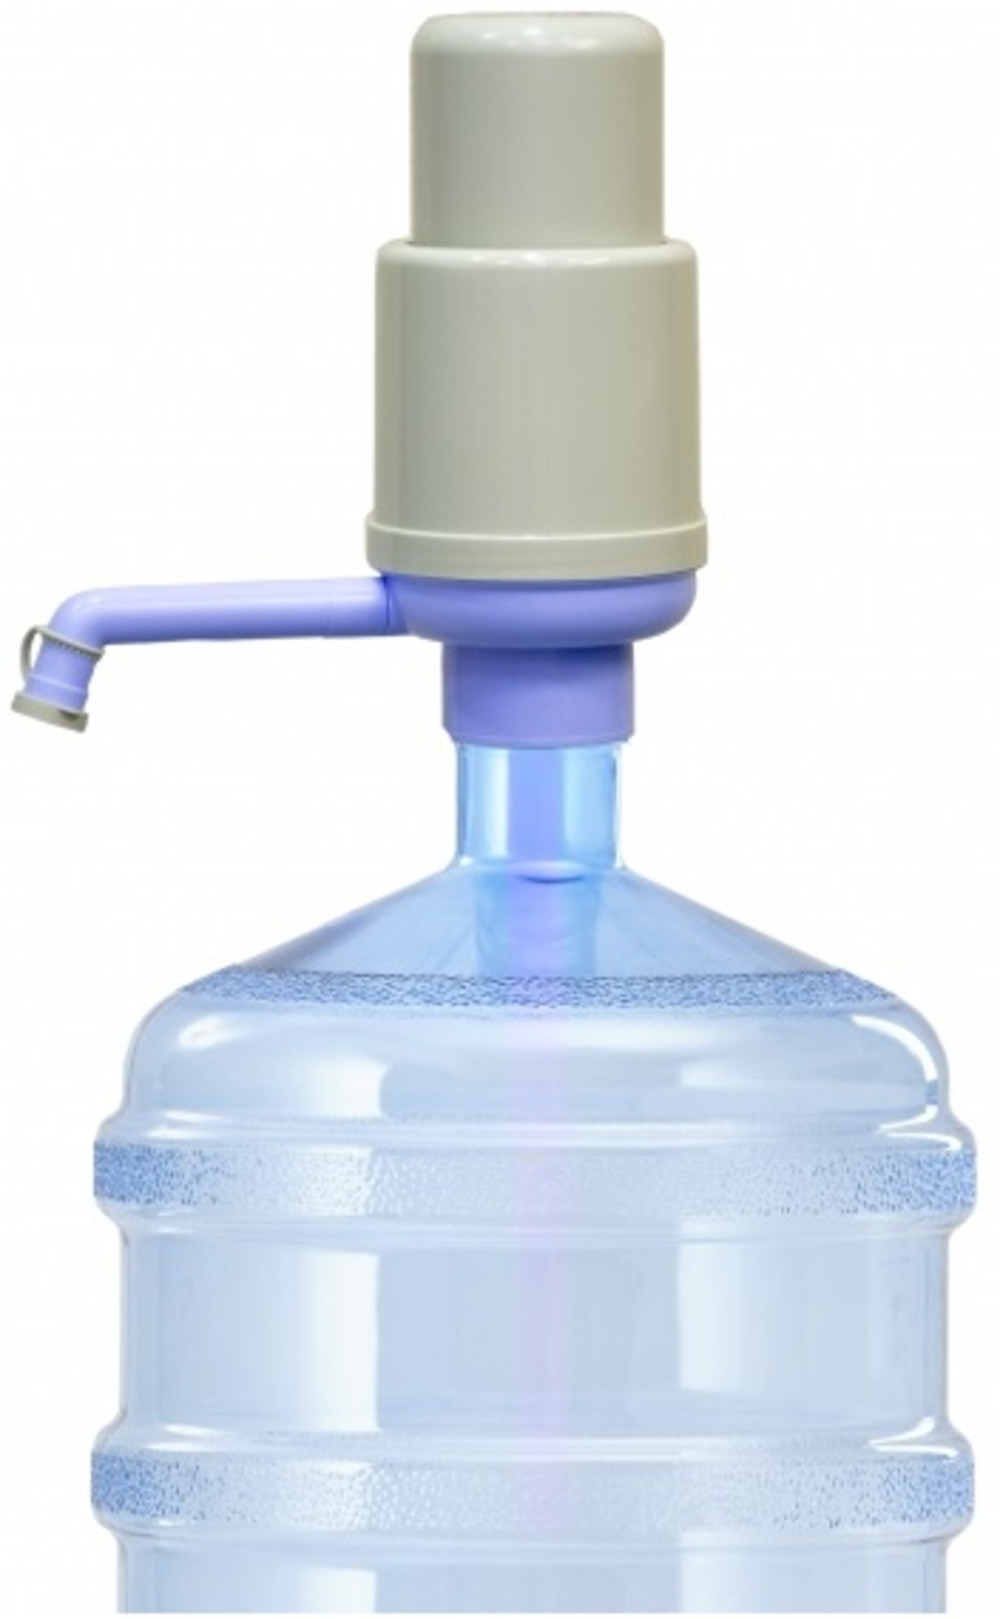 Механическая помпа для воды (на 19л бутыль) AEL (аел). Помпа для воды AEL 080 механическая. Помпа для воды на бутылку 19л аккумуляторная HRP - 15. Помпа для воды Aqua work электрическая.